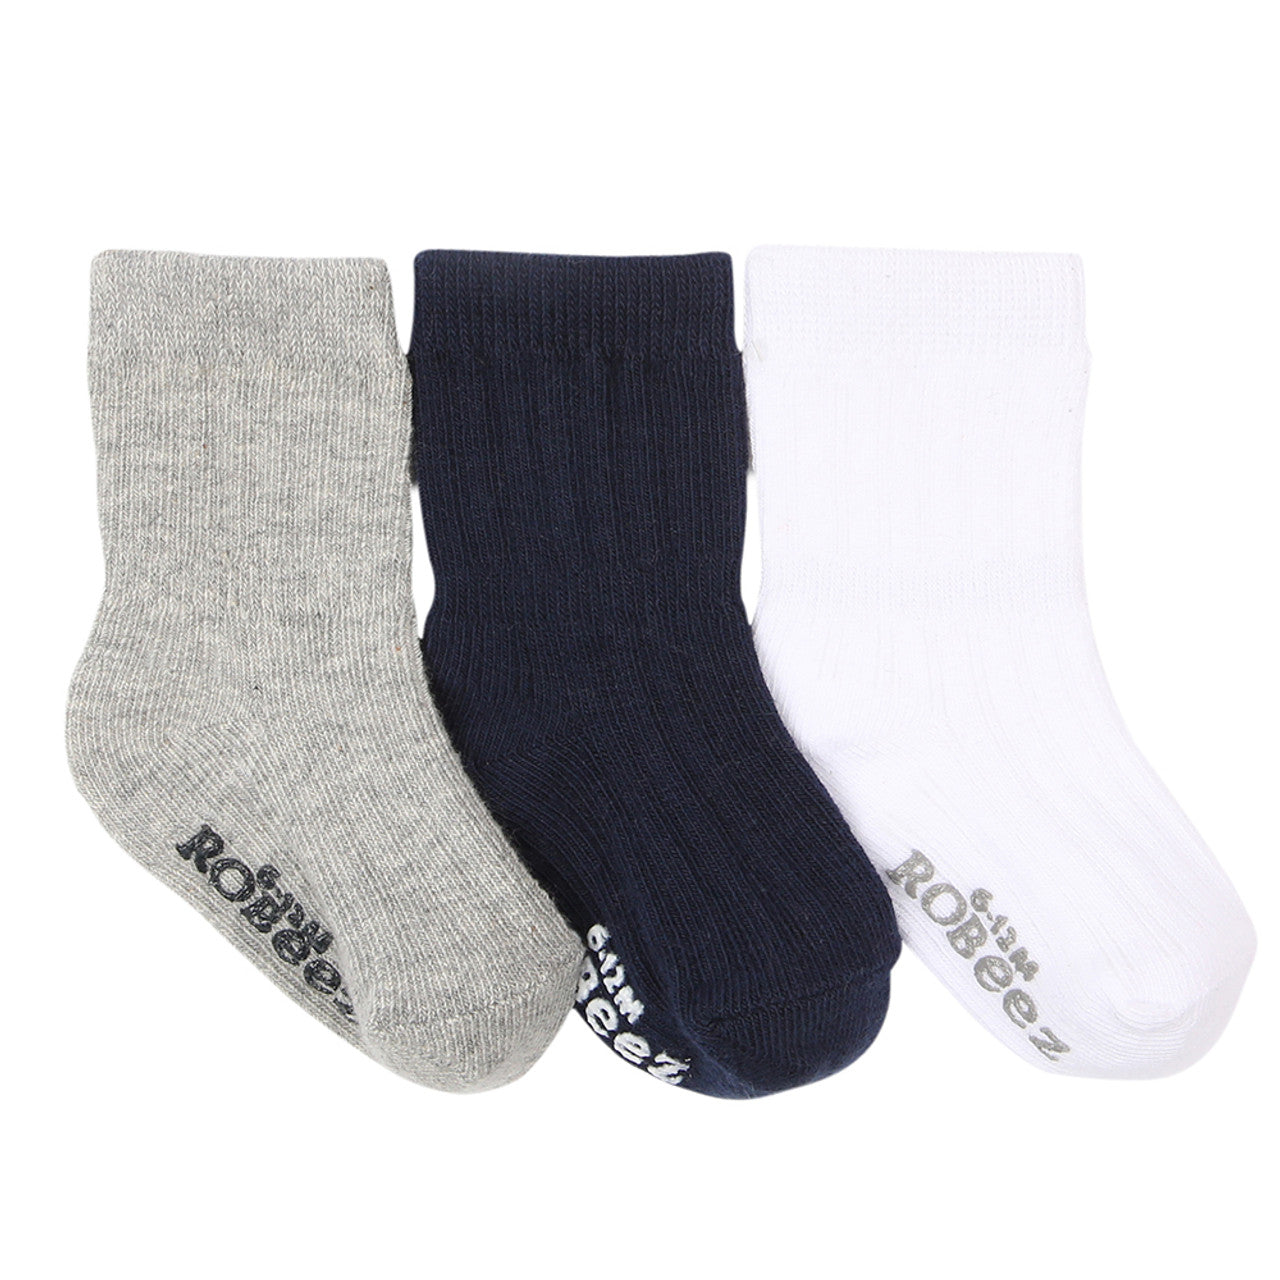 Robeez Basics Socks